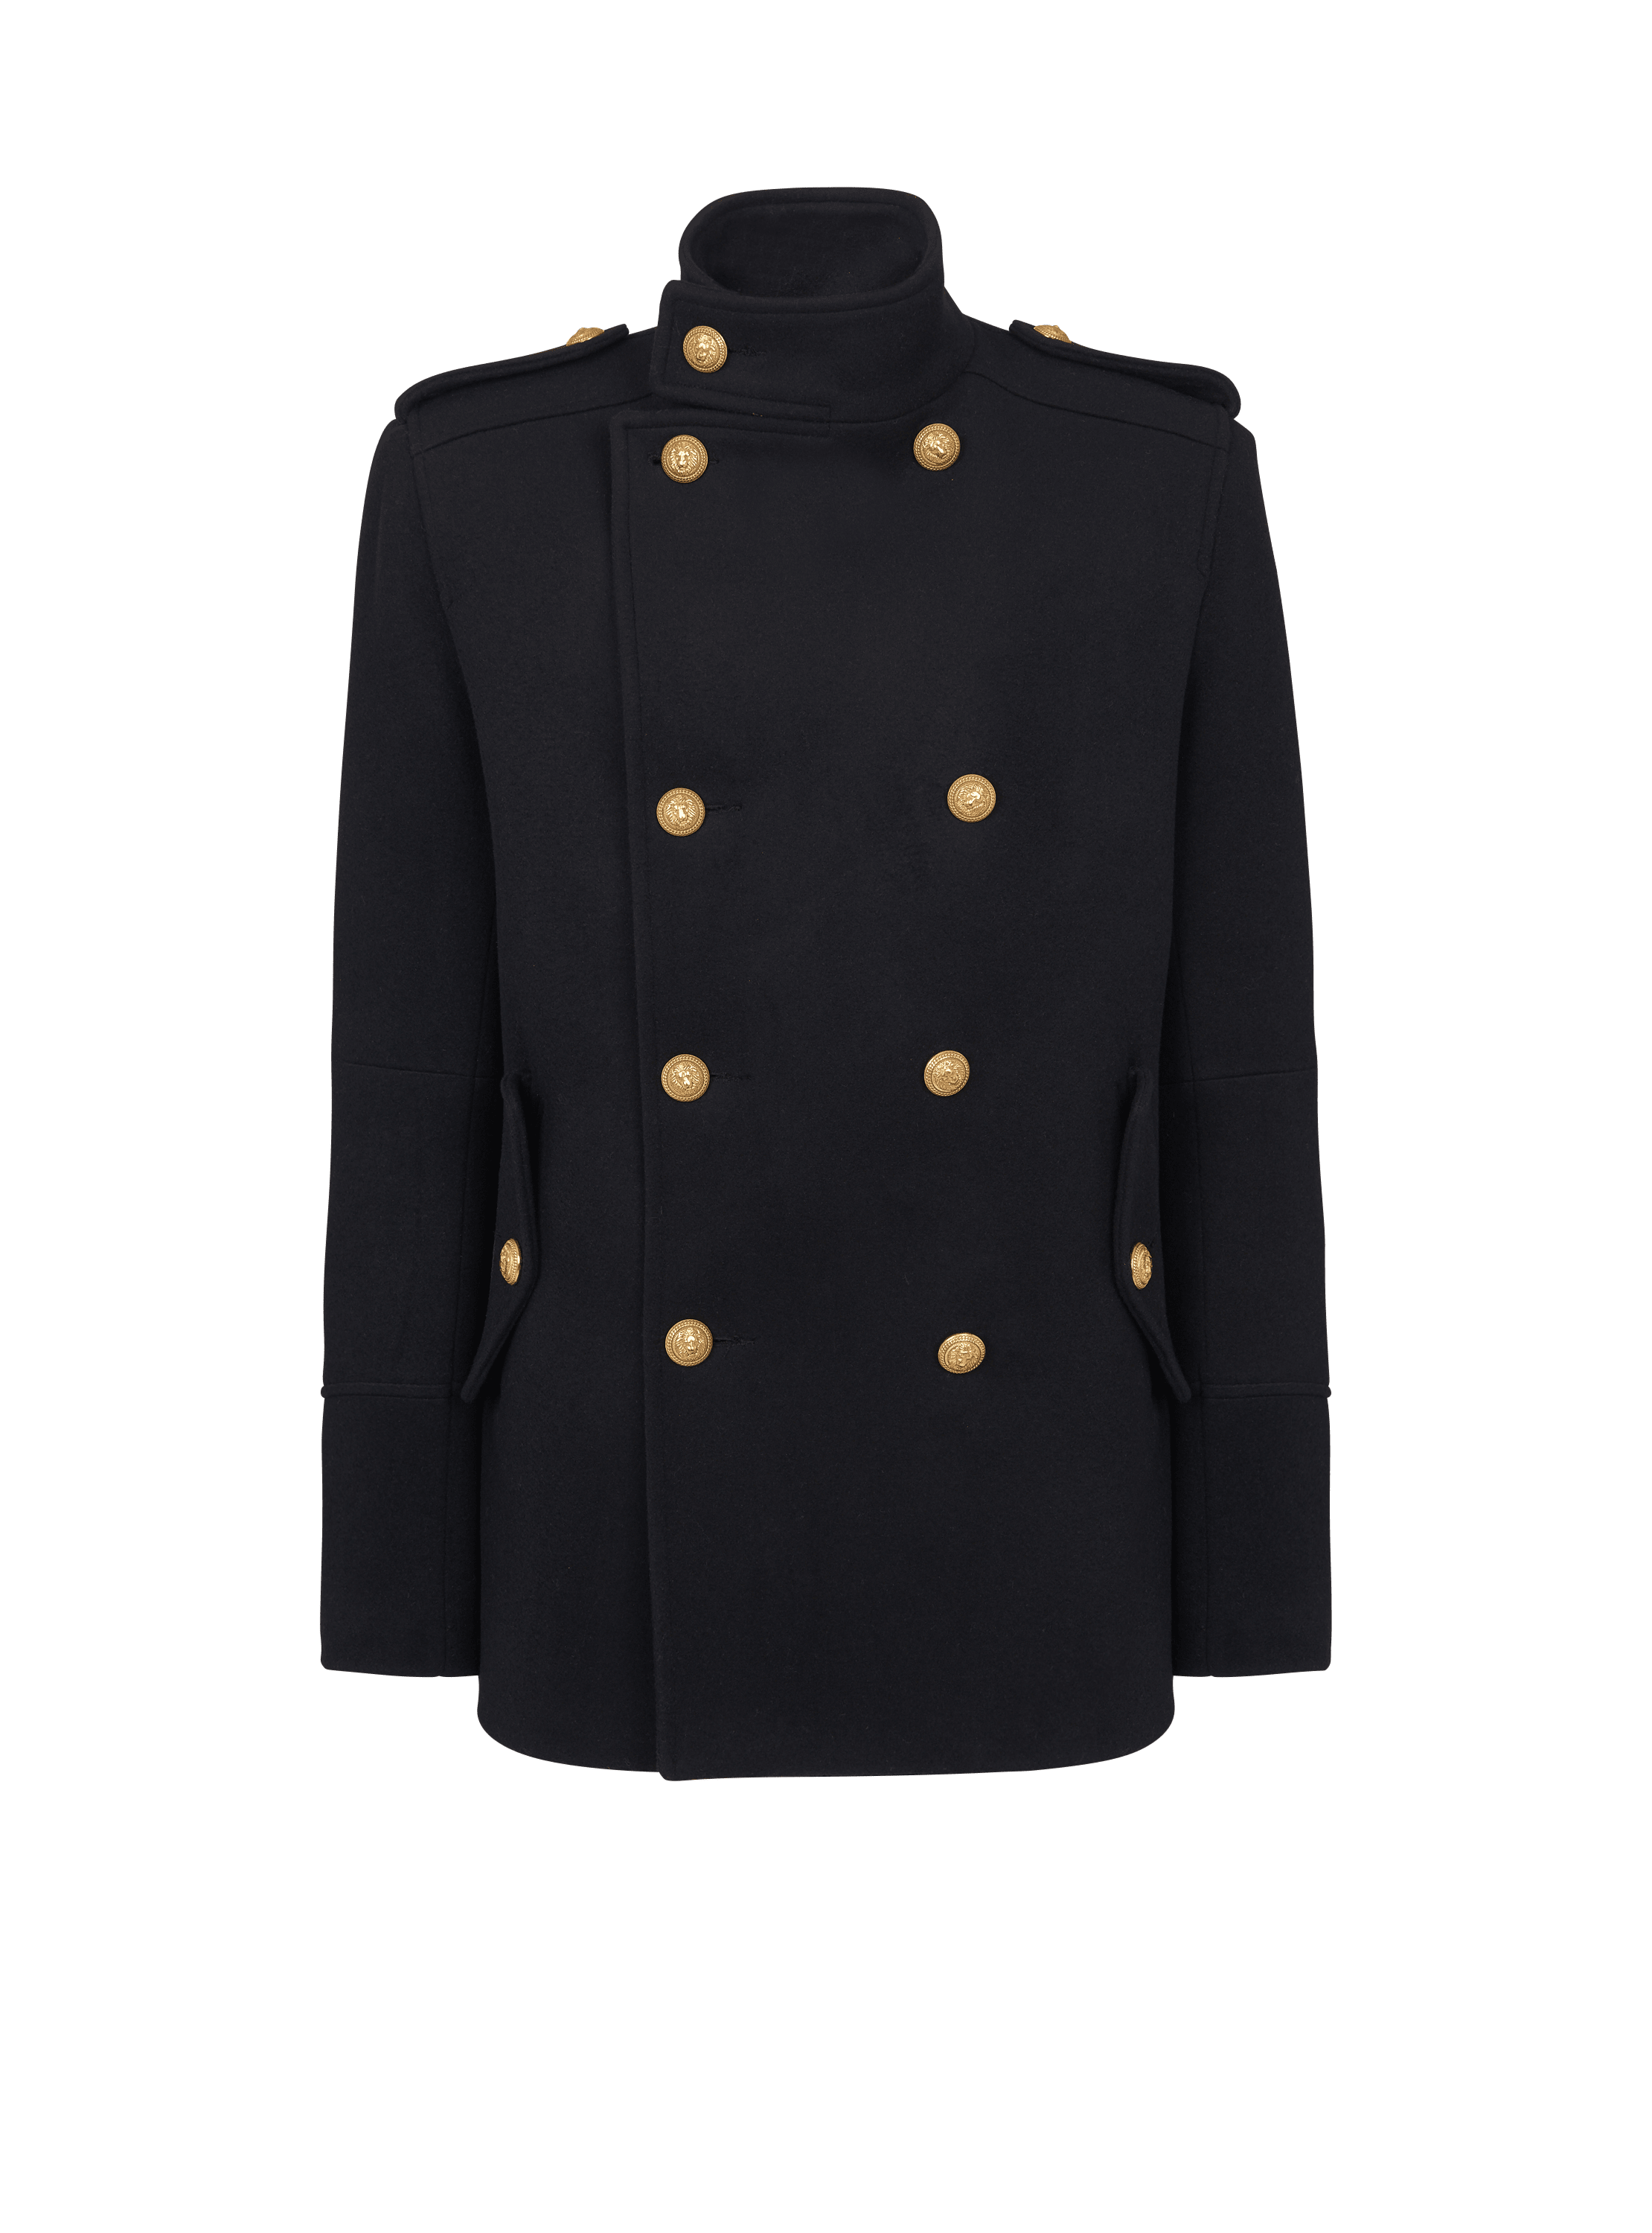 Short military-style coat